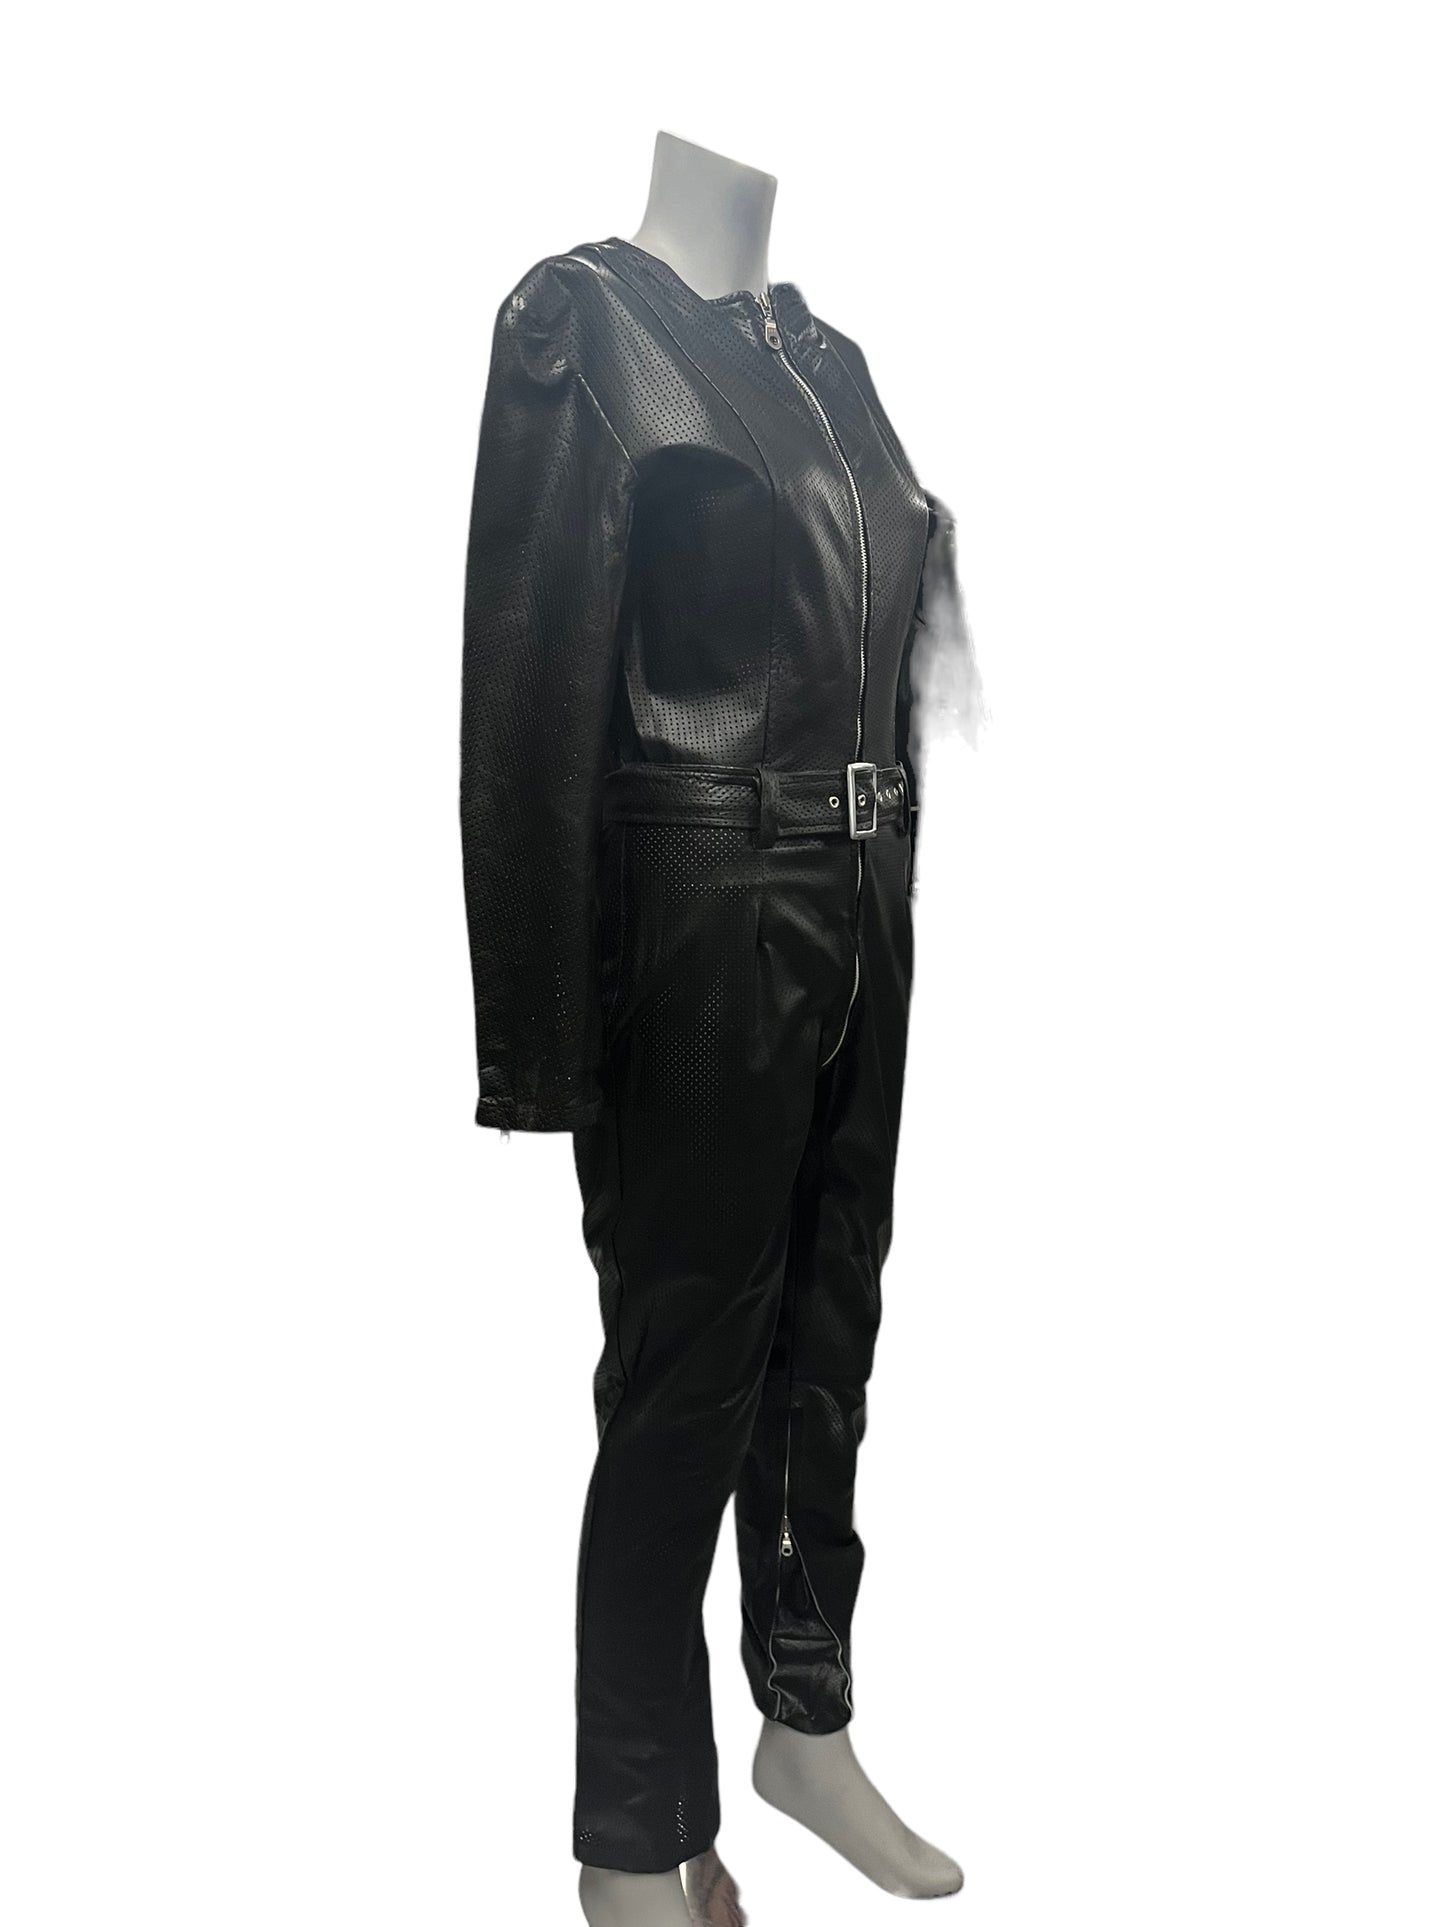 Fashion World - LL58 - Black Leather Suit - Size M